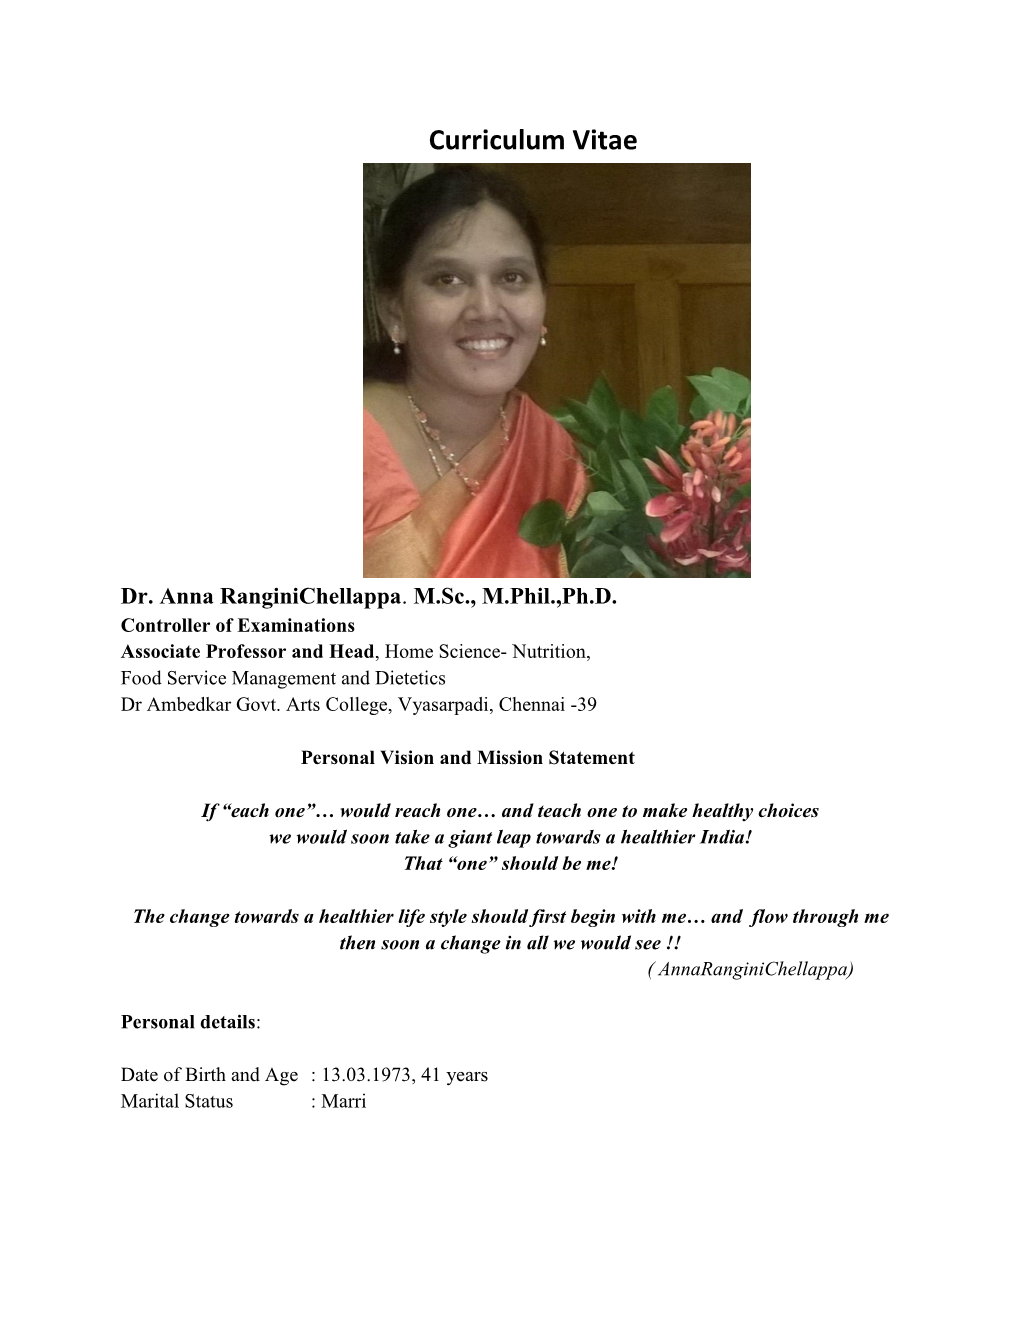 Dr. Anna Rangini Chellappa